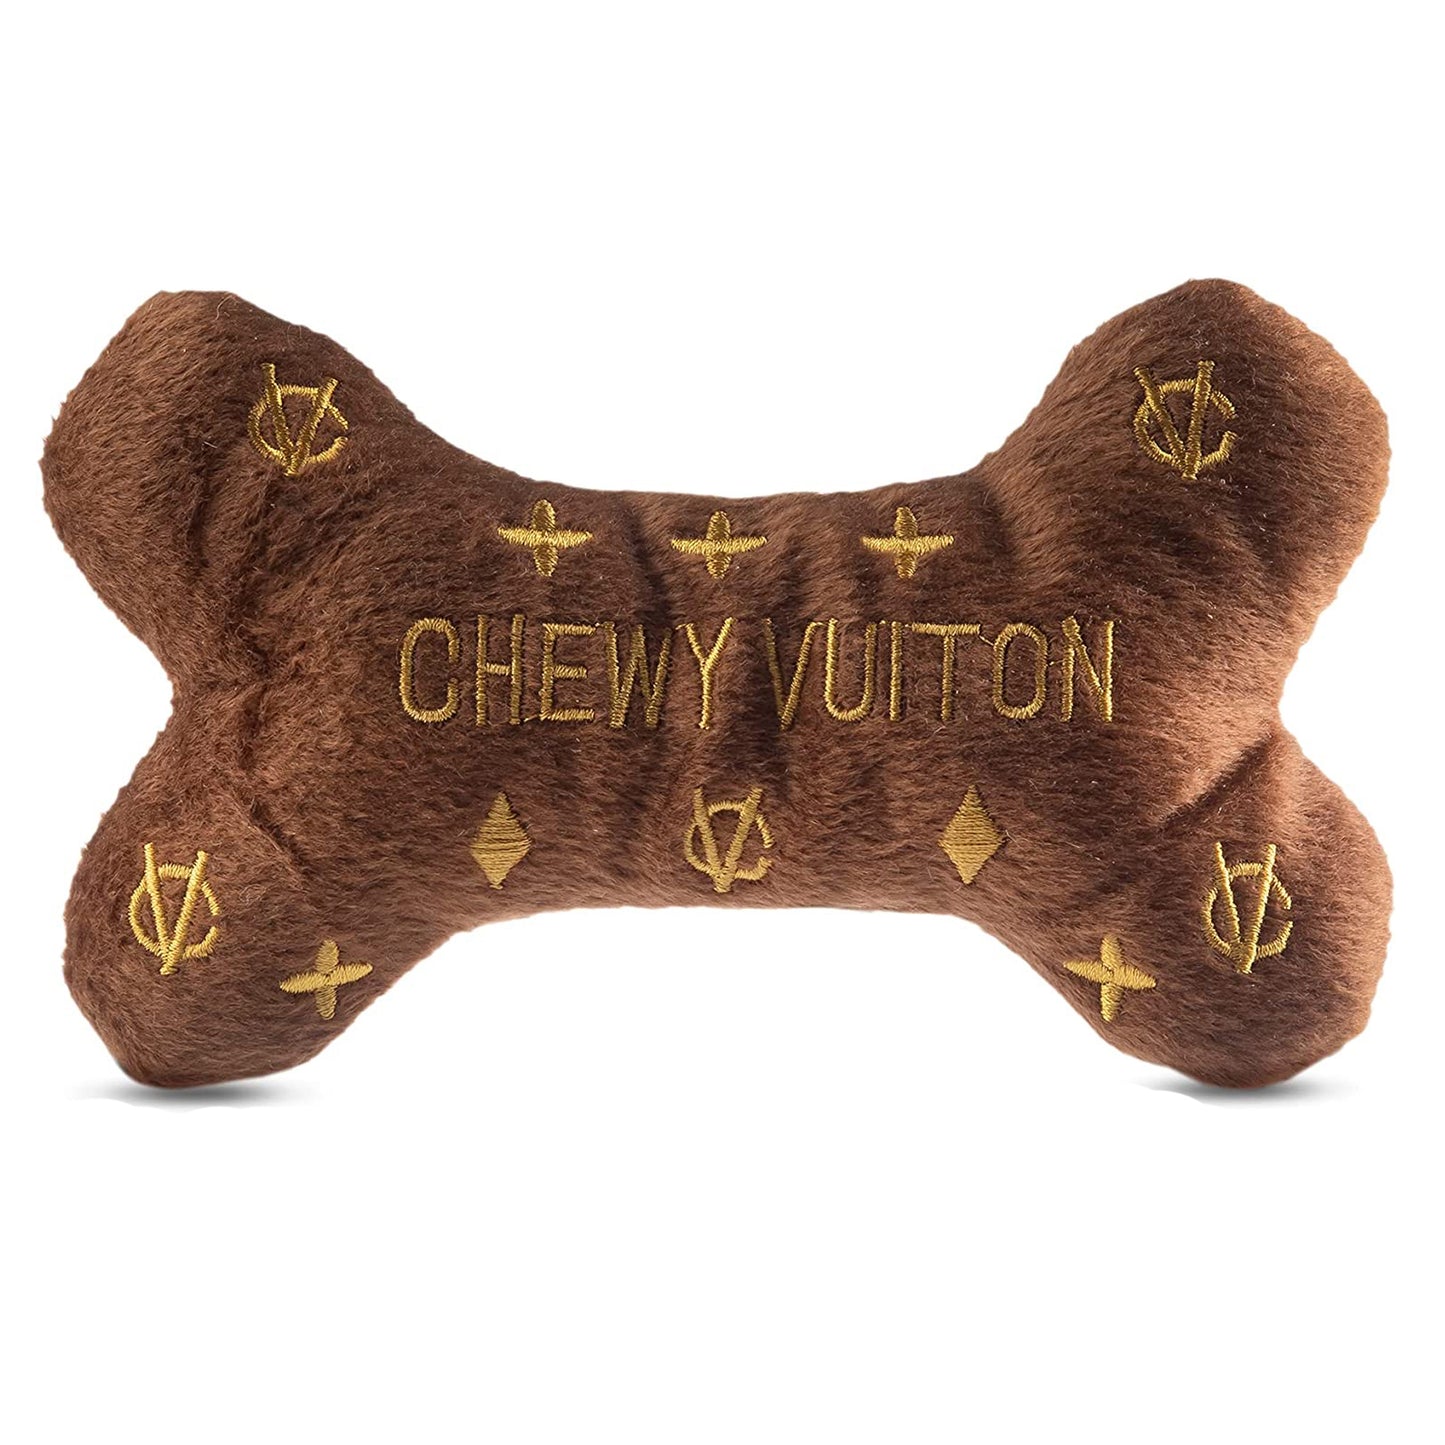 Chewy Vuiton Brown Bone Toy